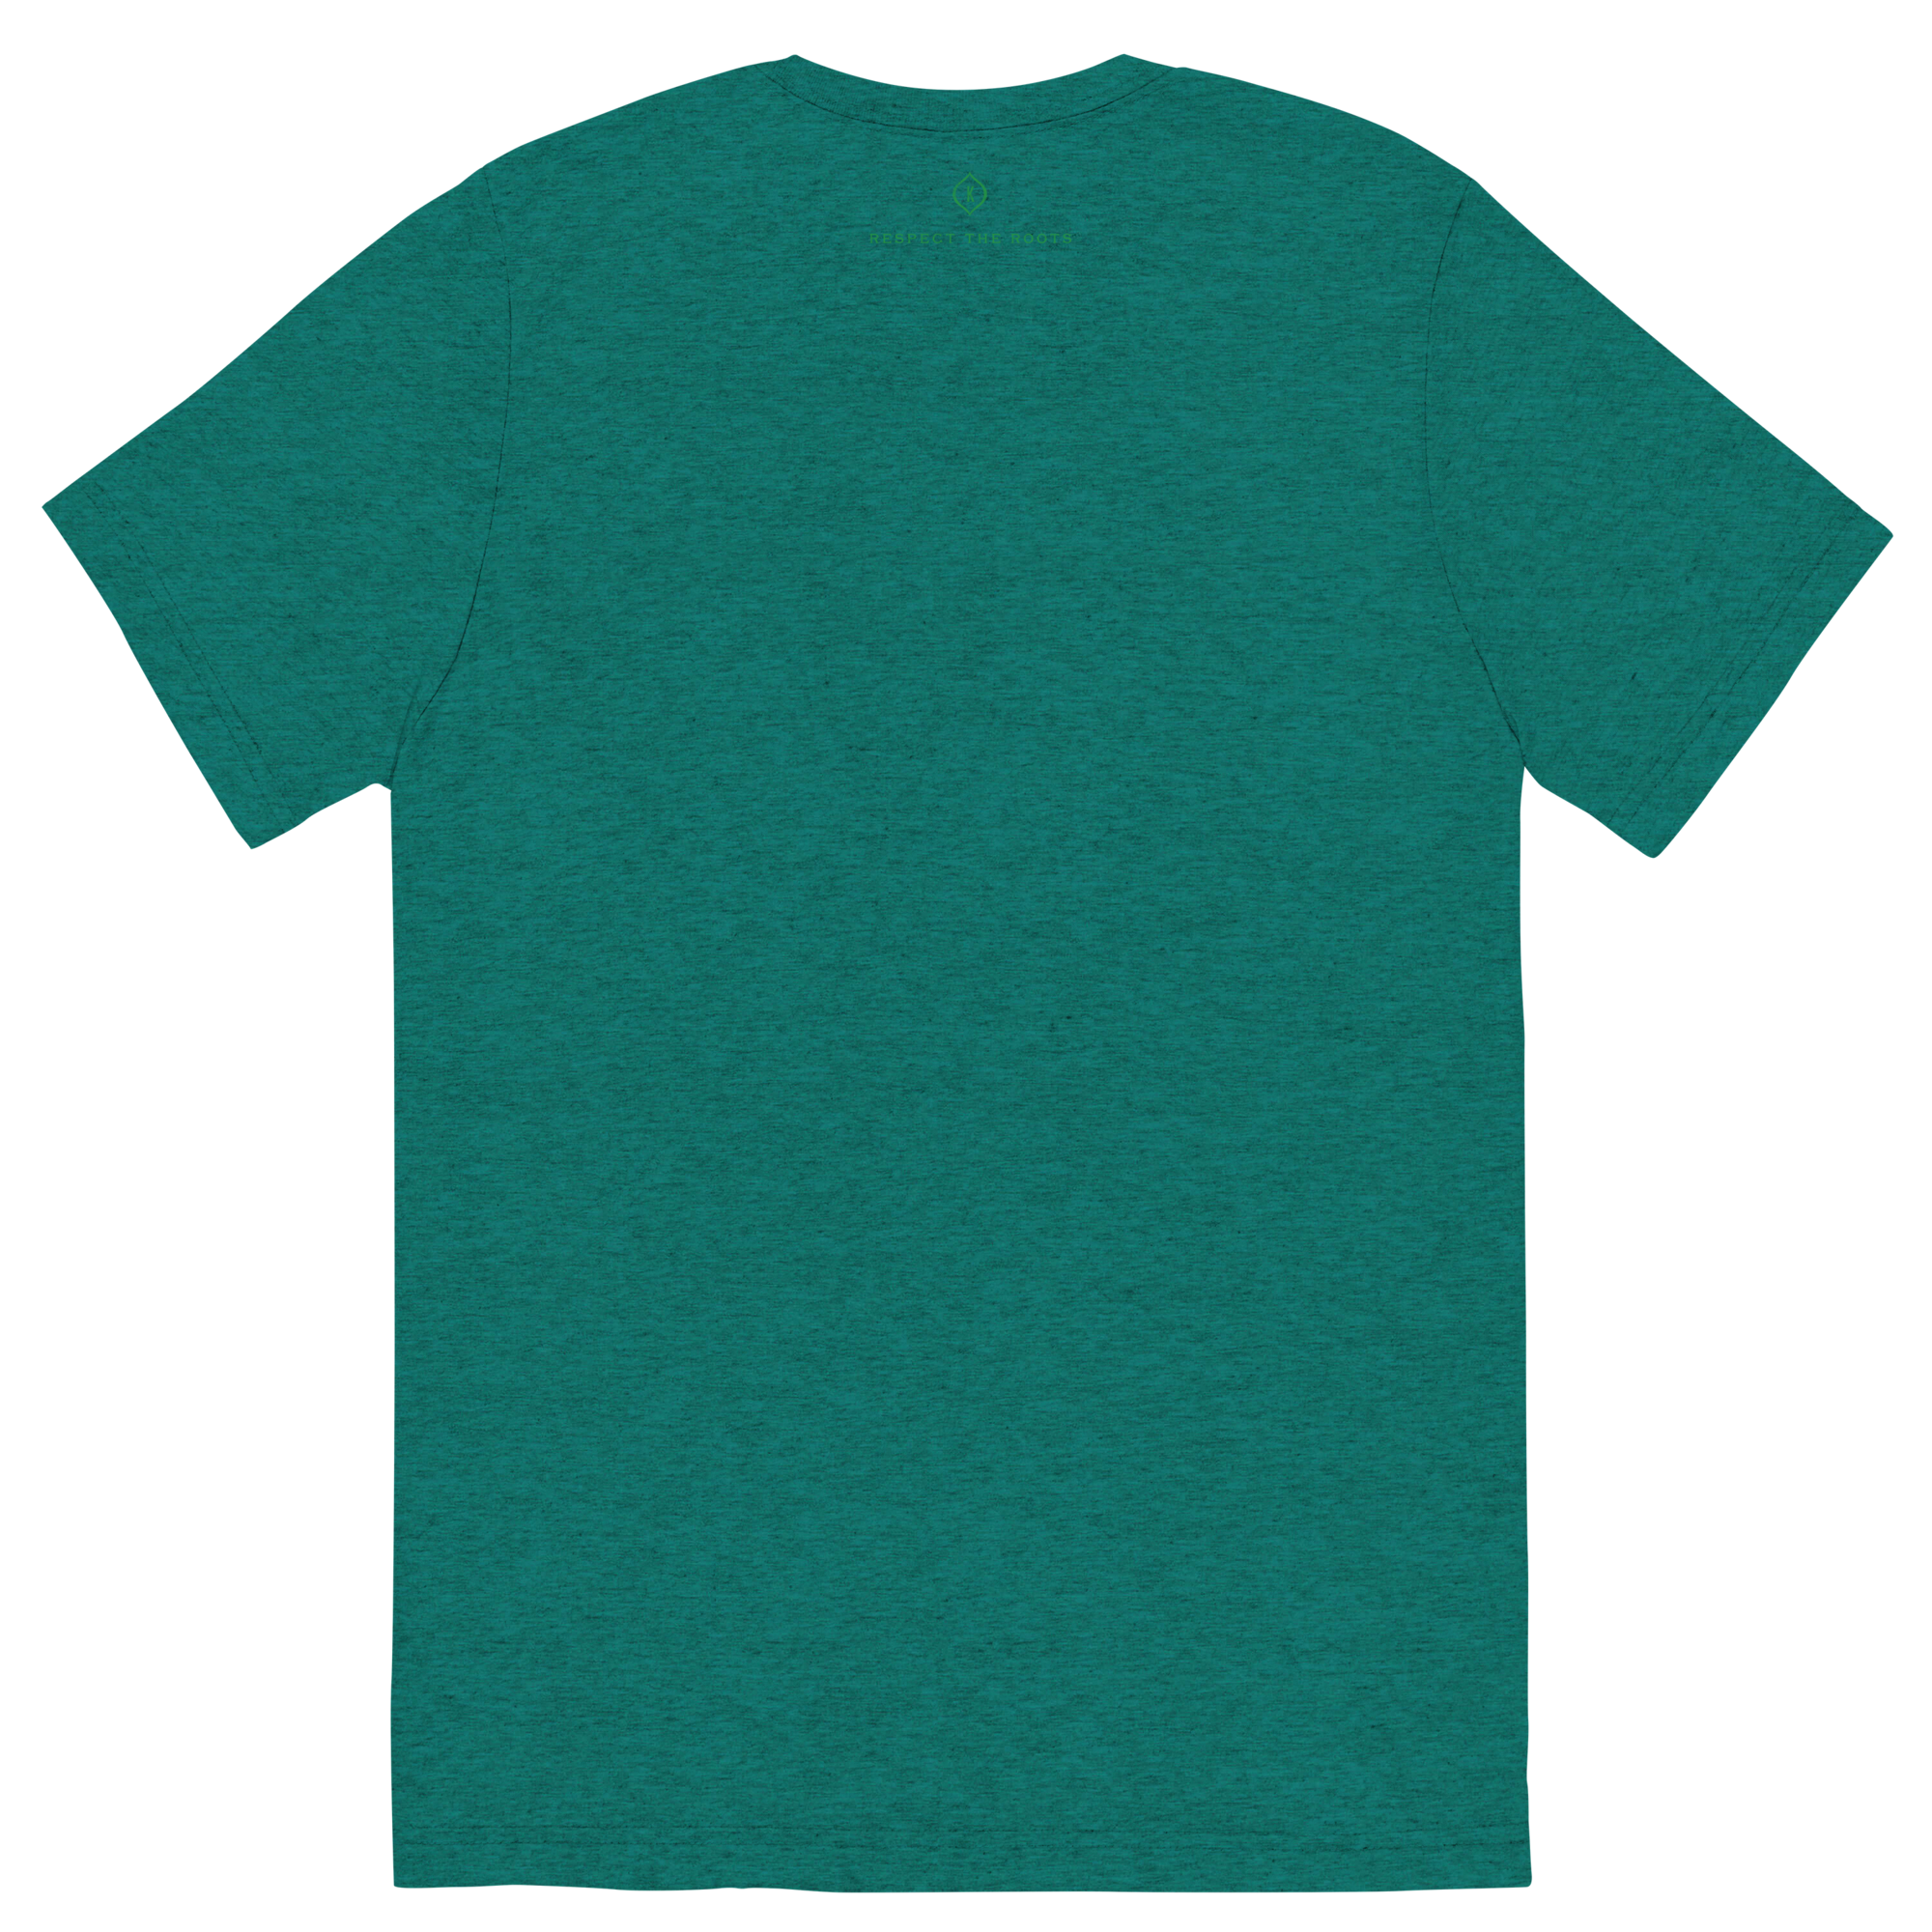 Short Sleeve T-Shirt Kaya Vintage Farmers Choice Collection